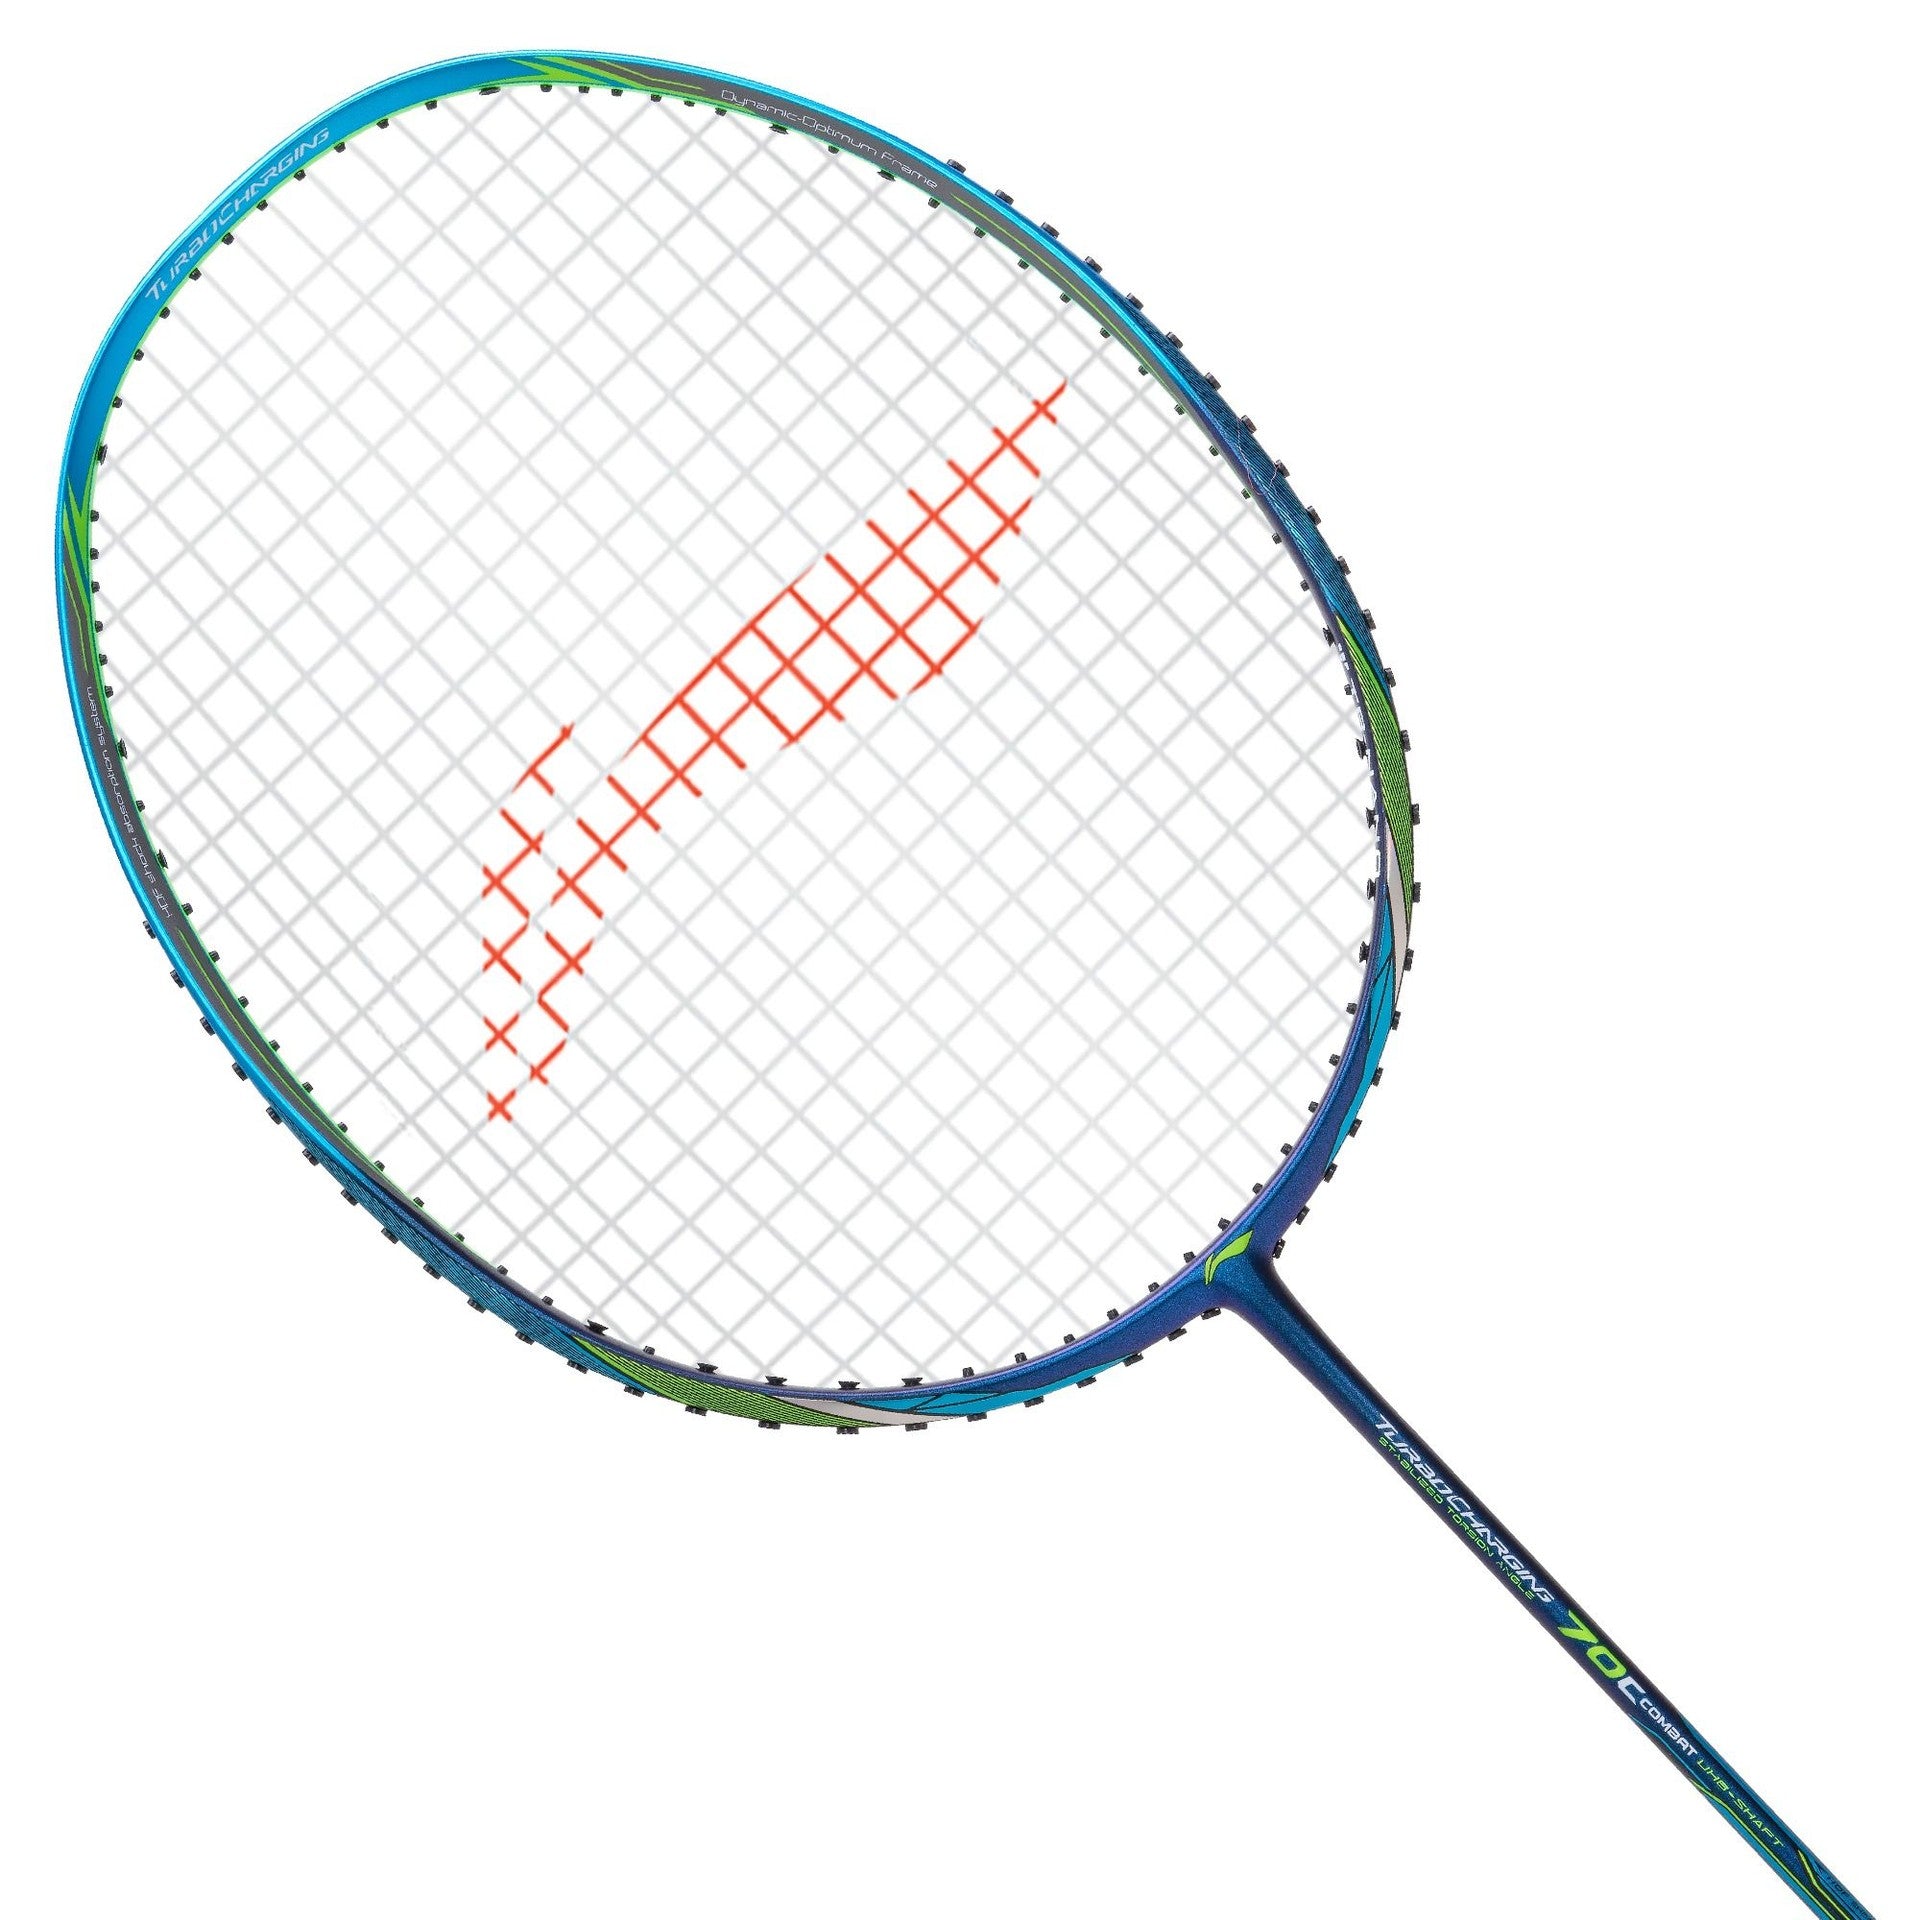 Li-Ning Turbo Charging 70C Combat Carbon Fibre Badminton Racquet - Glamour Blue - Best Price online Prokicksports.com